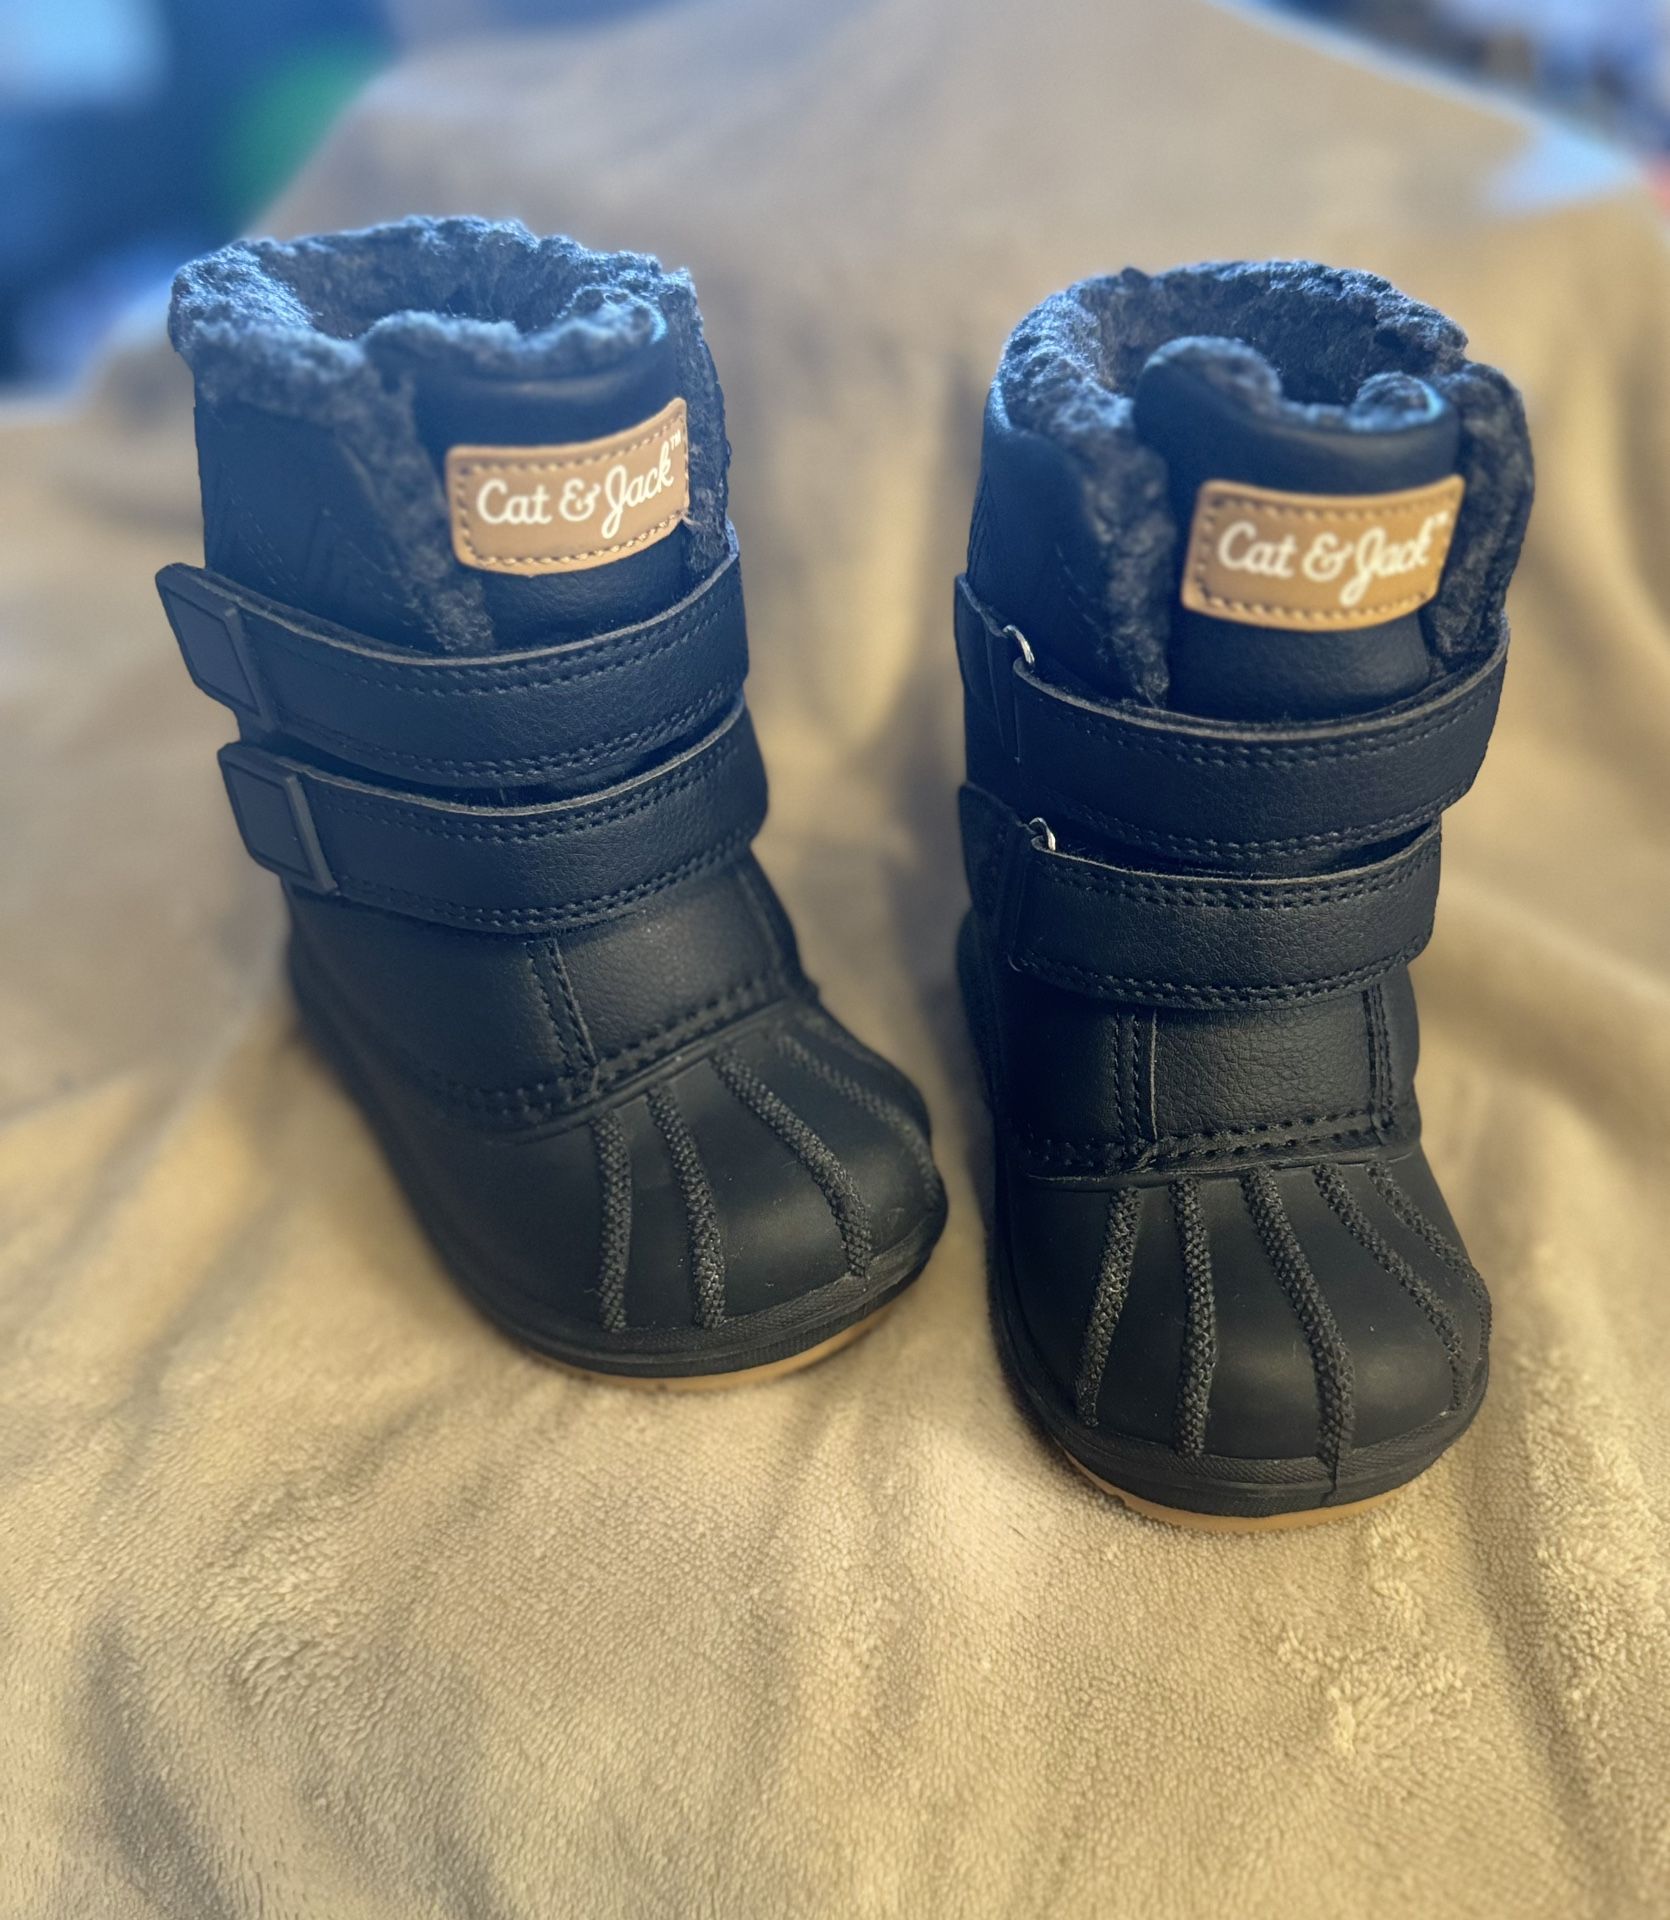 Waterproof Boots (small Child Size 5) 